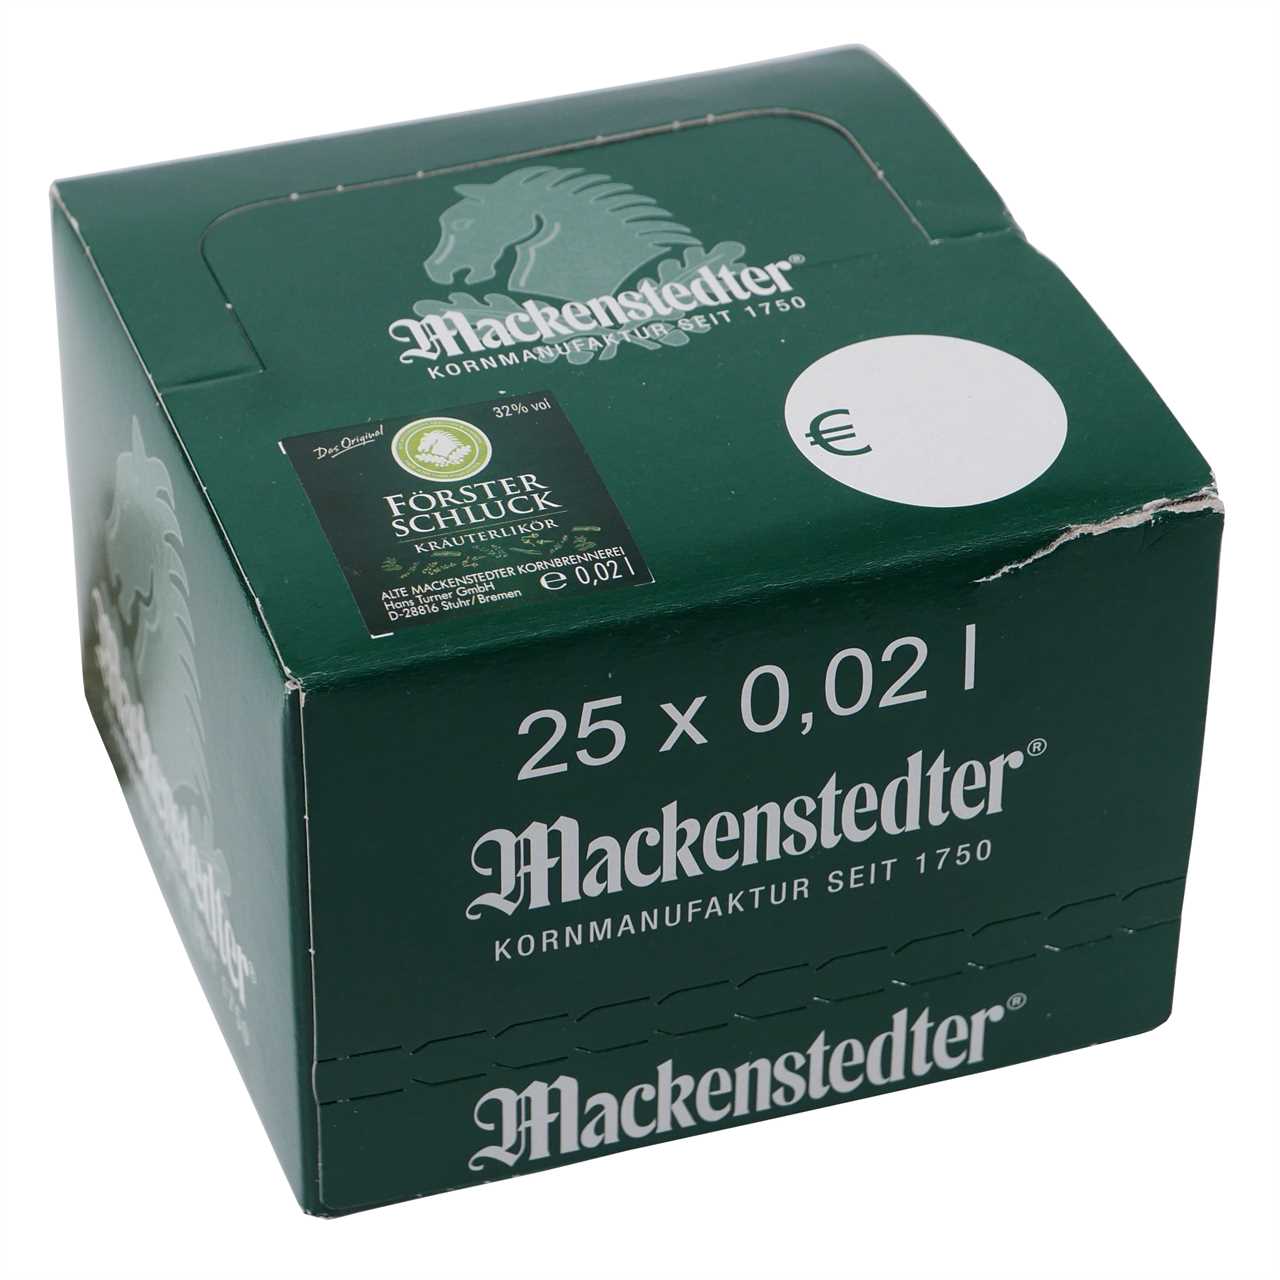 Mackenstedter Försterschluck (25 x 0,02L)